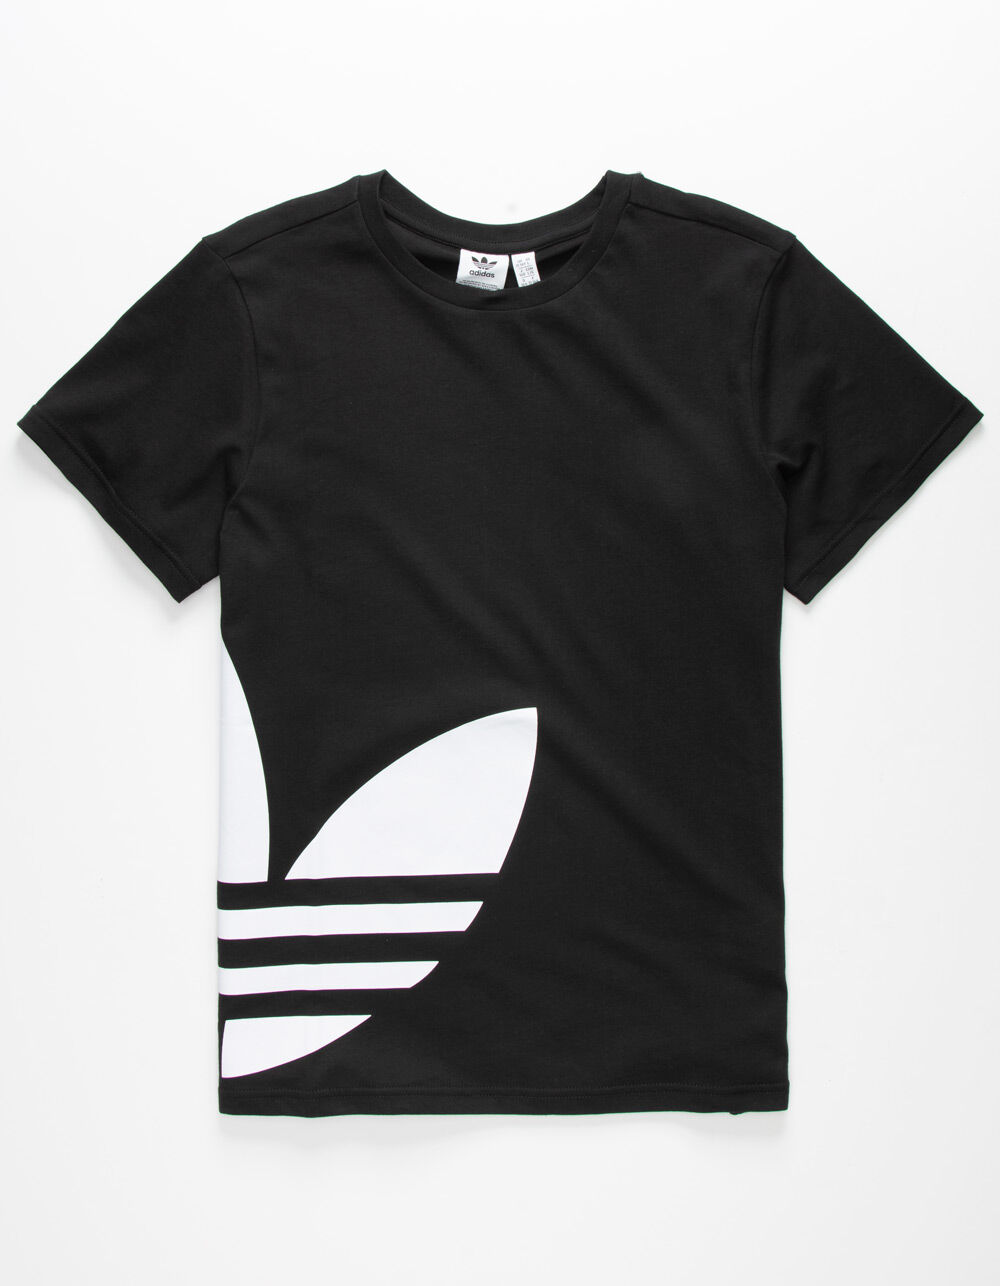 ADIDAS Big Trefoil Boys T-Shirt - BLACK | Tillys